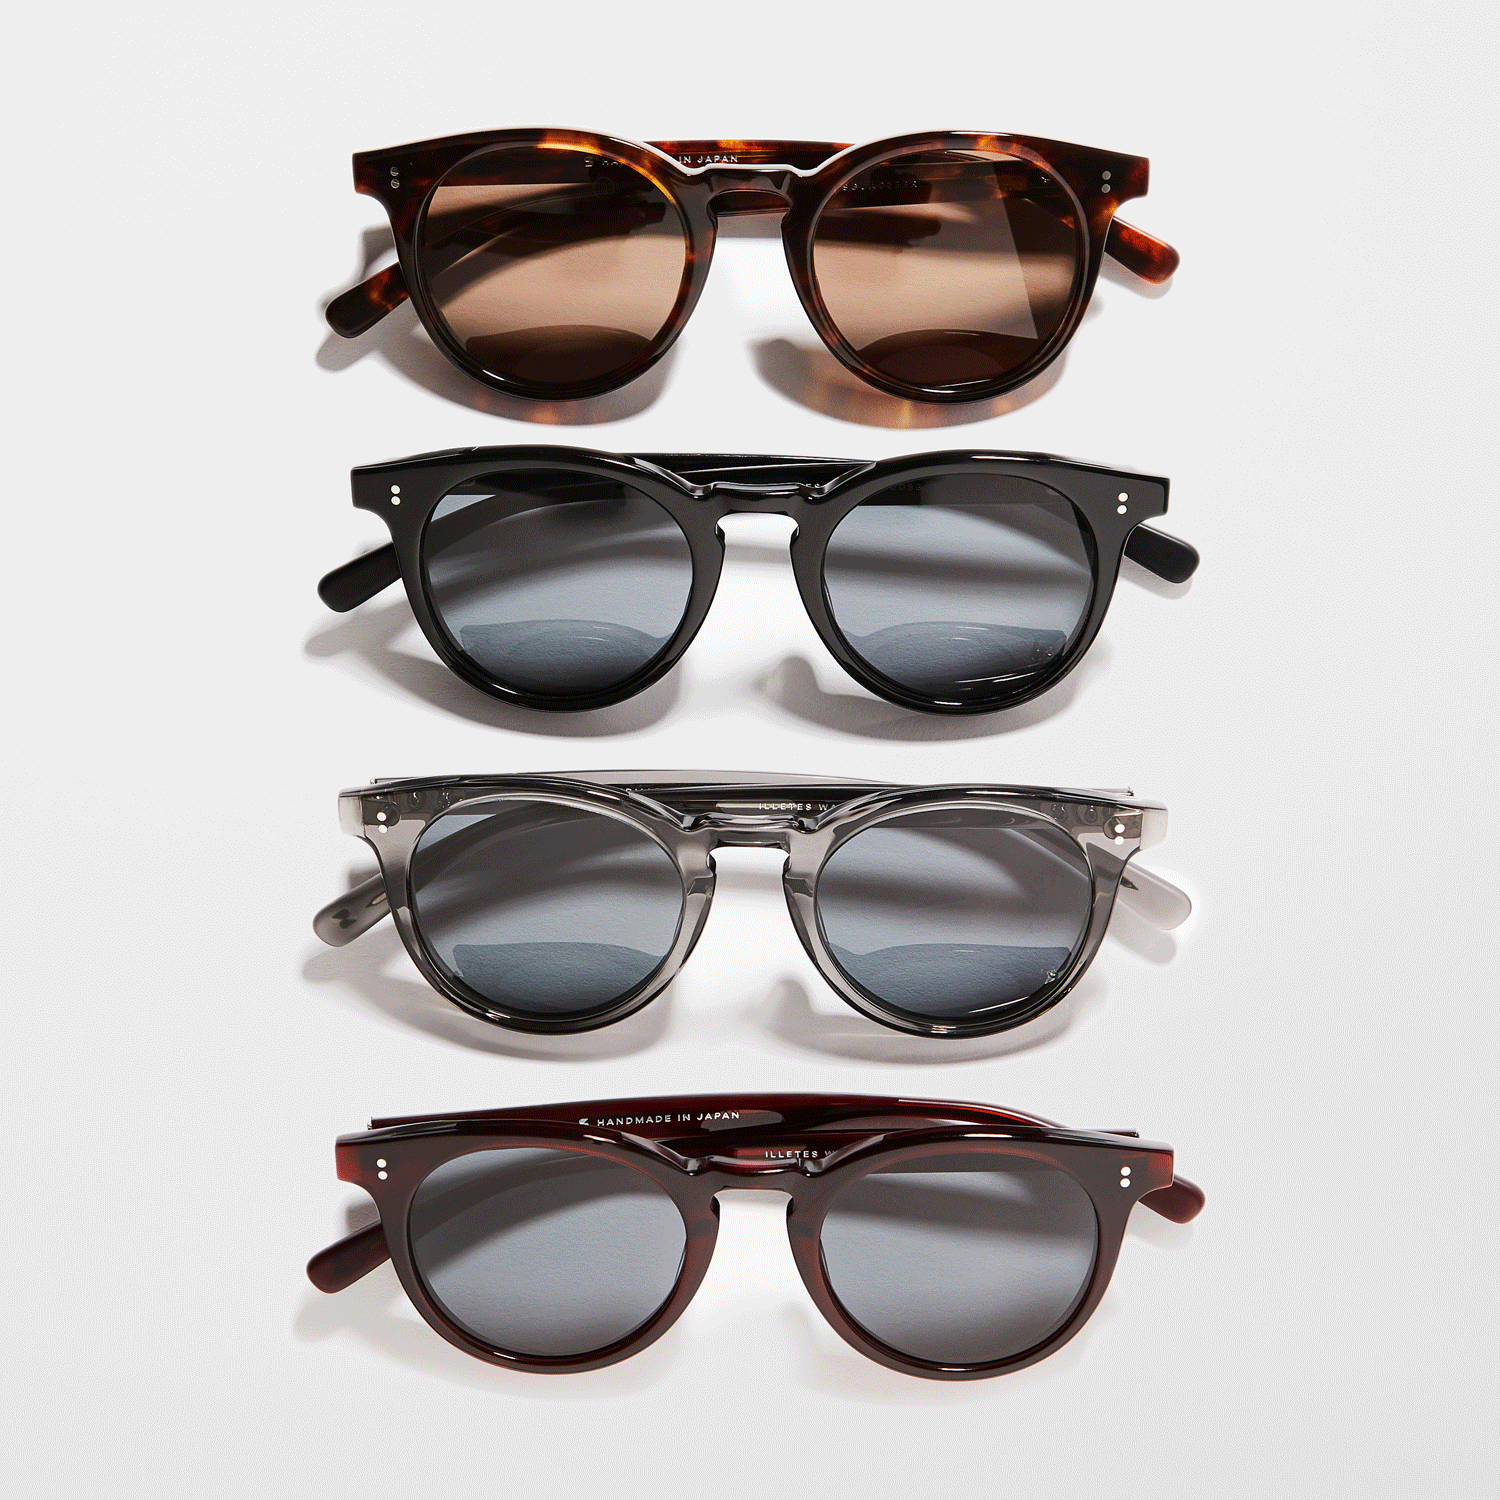 Buttertron Polarized Sunglasses - Fashionable Single Lens Cat-Eye Sunglasses  Online